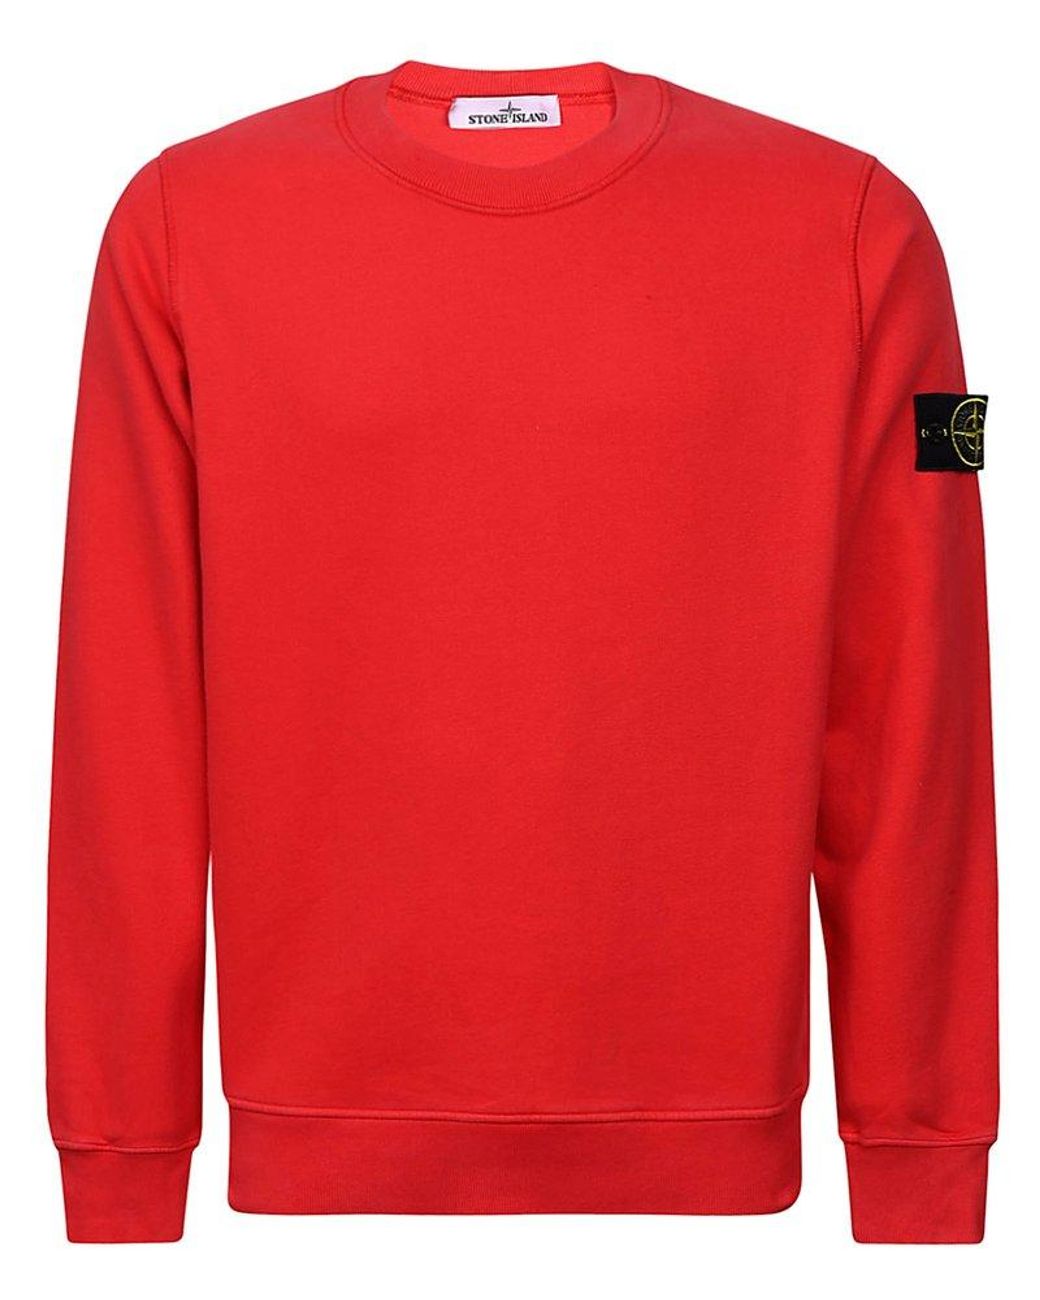 Stone Island Logo Patch Crewneck Sweatshirt in Red for Men | Lyst